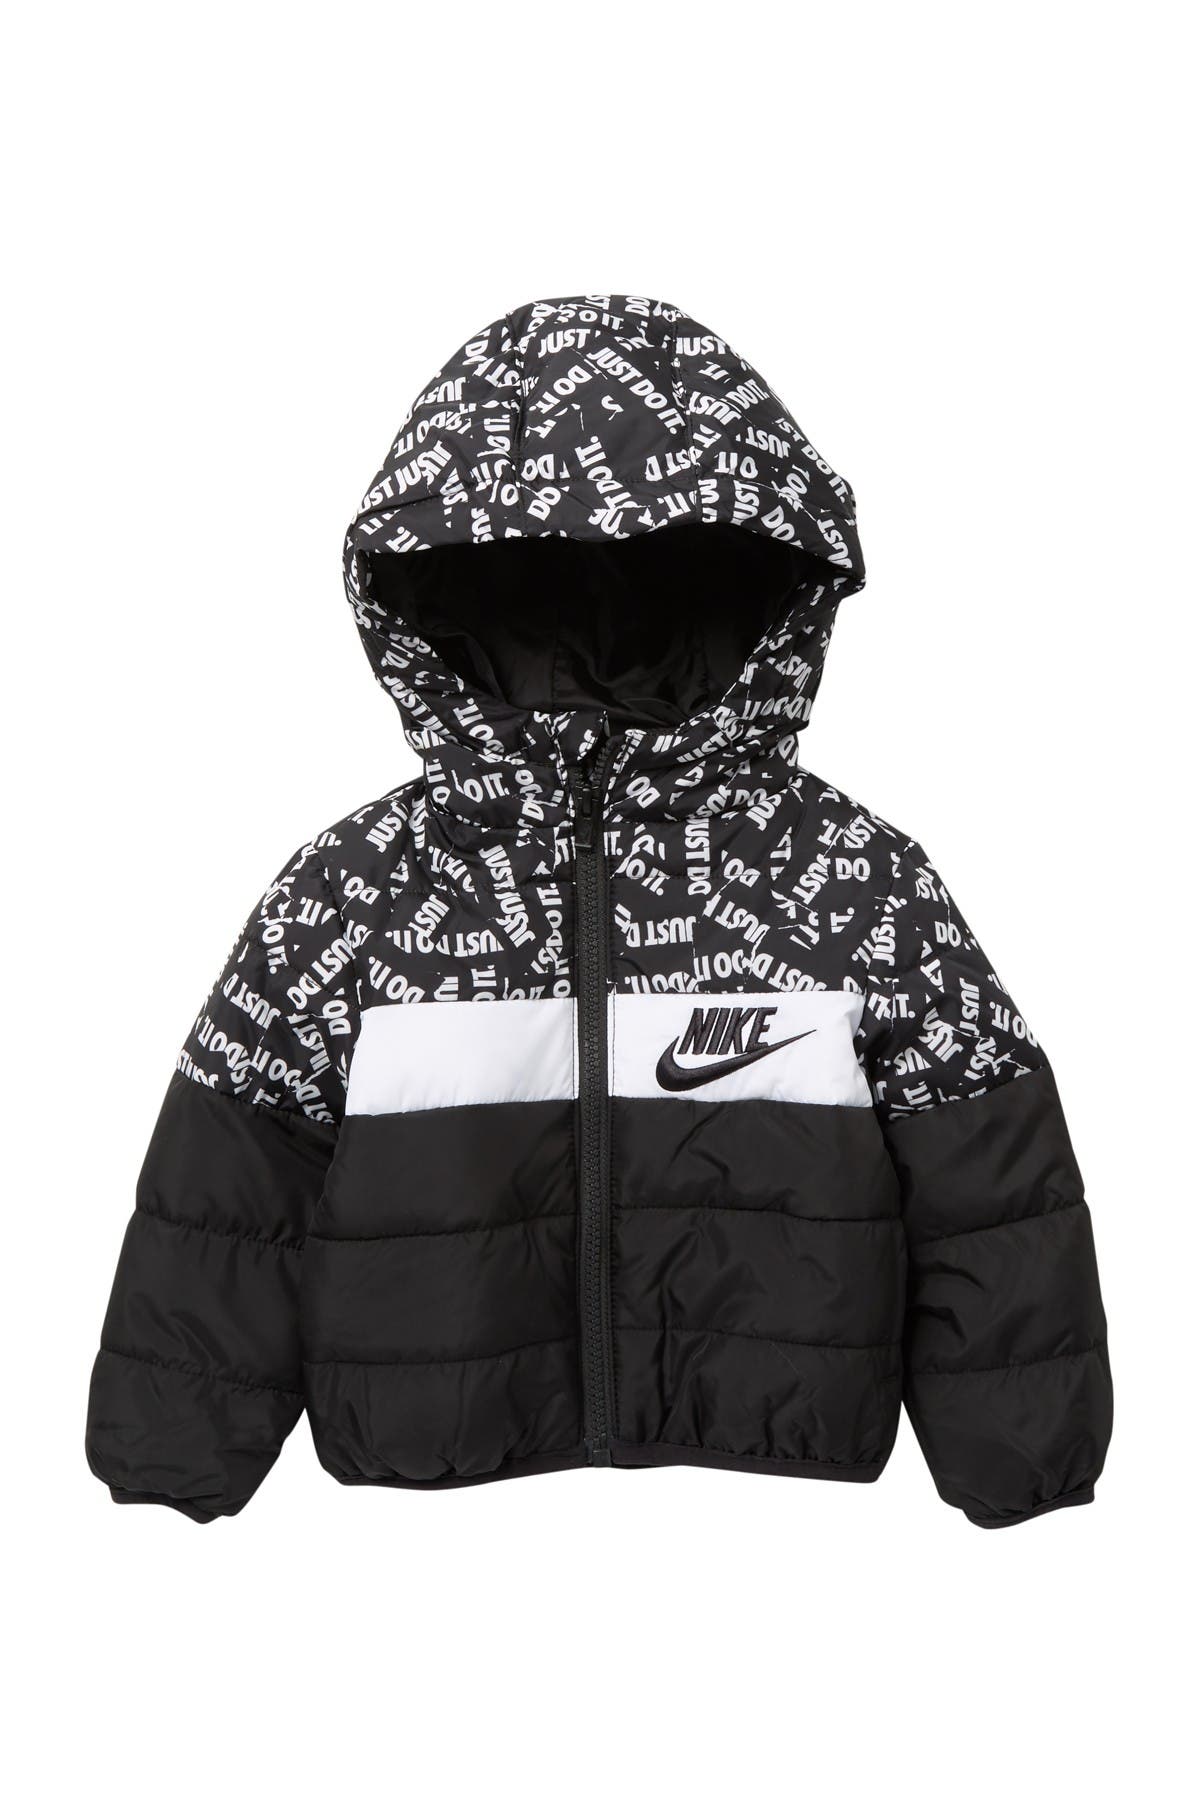 Nike | Just Do It Puffer Jacket 